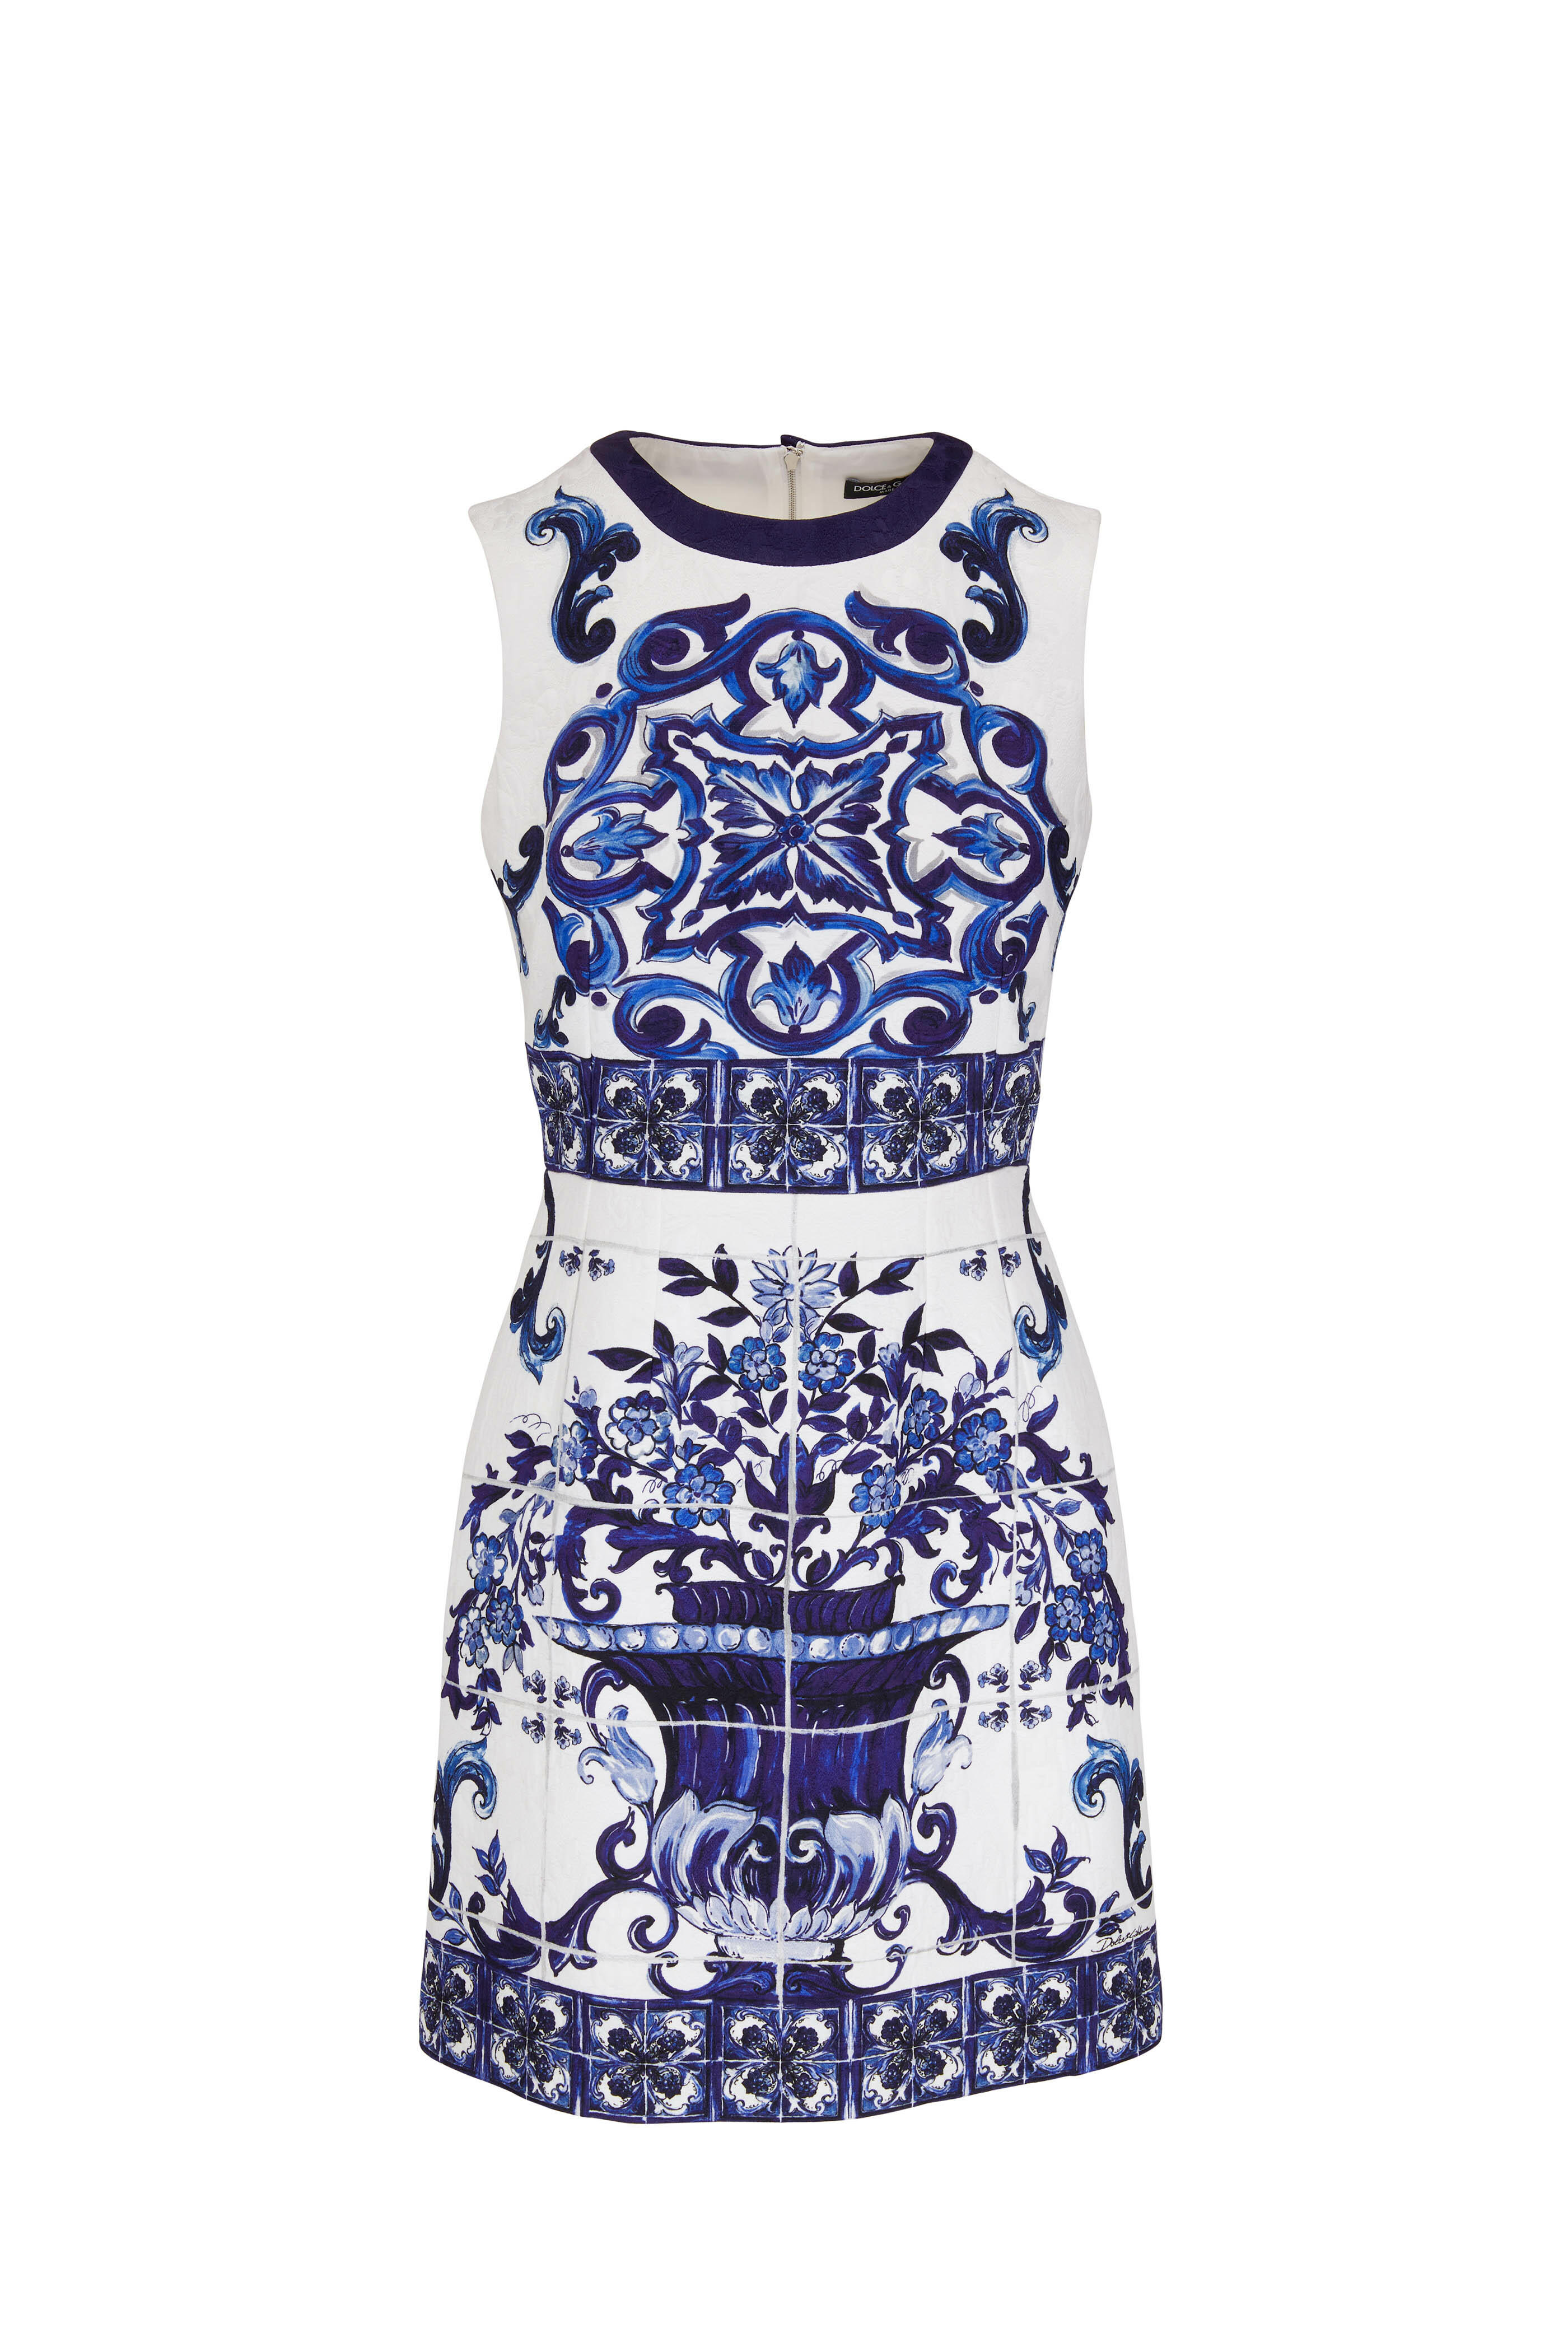 Dolce & Gabbana - Blue & White Printed Brocade Mini Dress